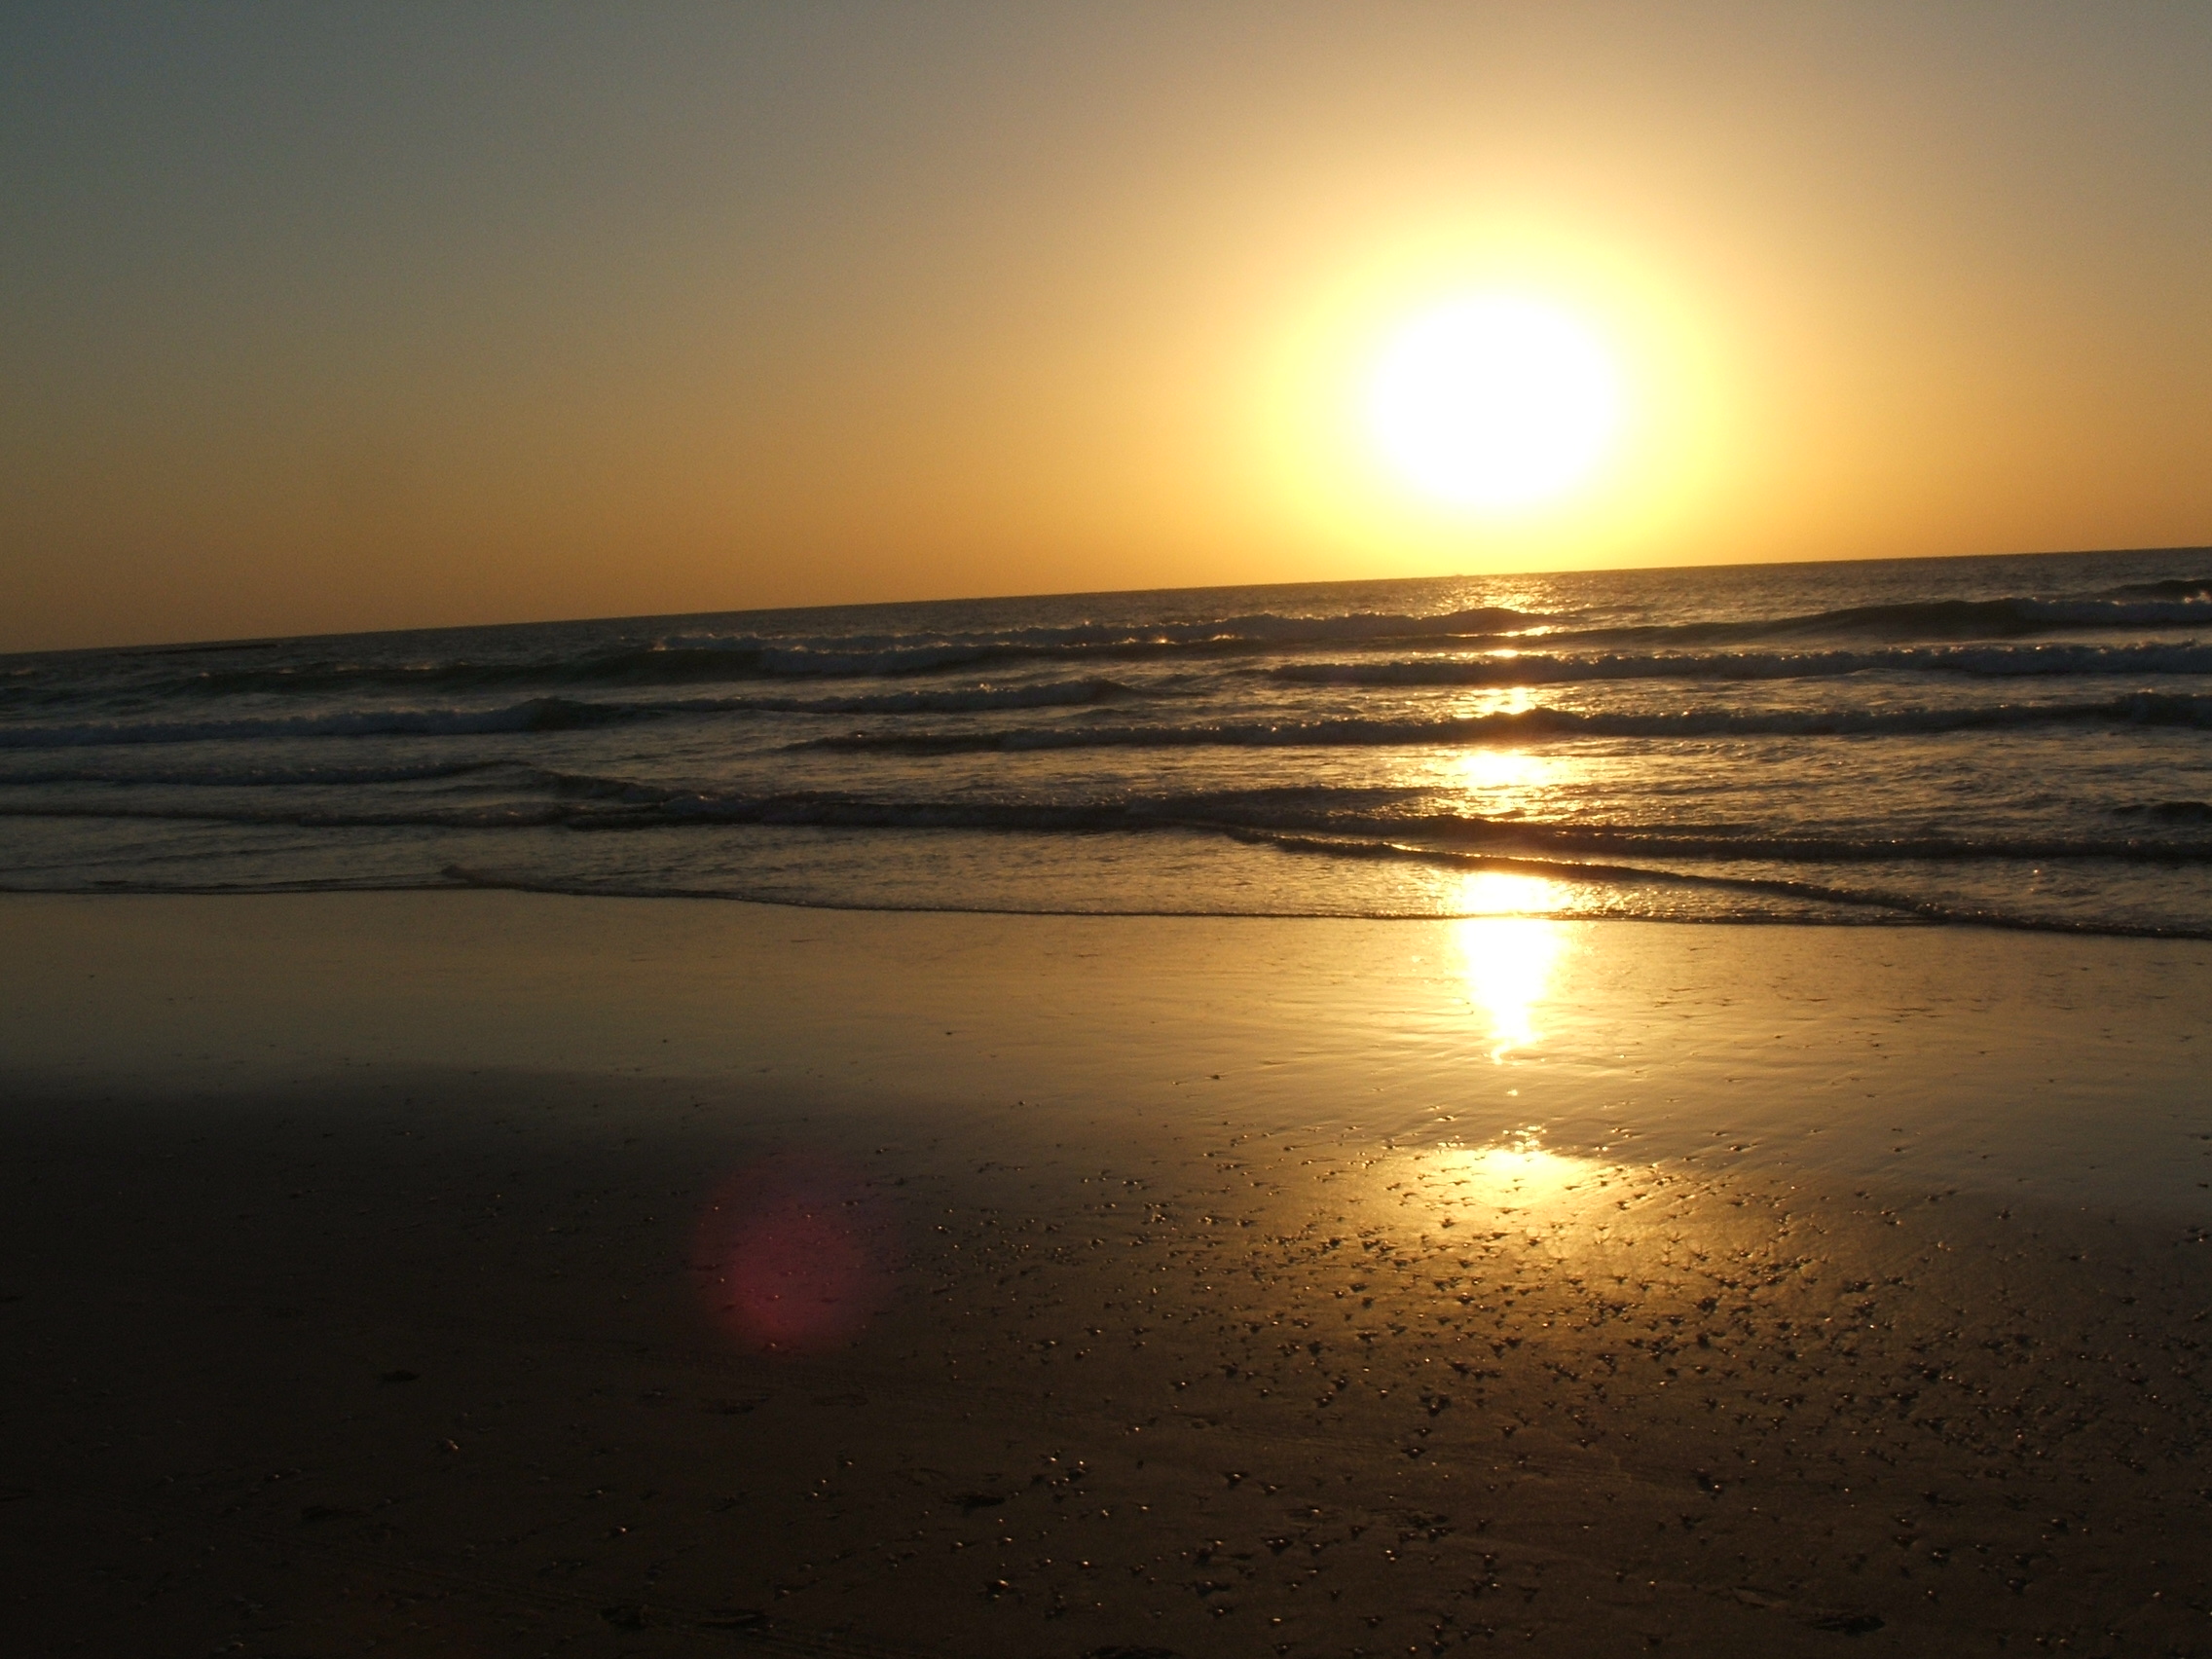 File:Sunset on the beach.JPG - Wikimedia Commons